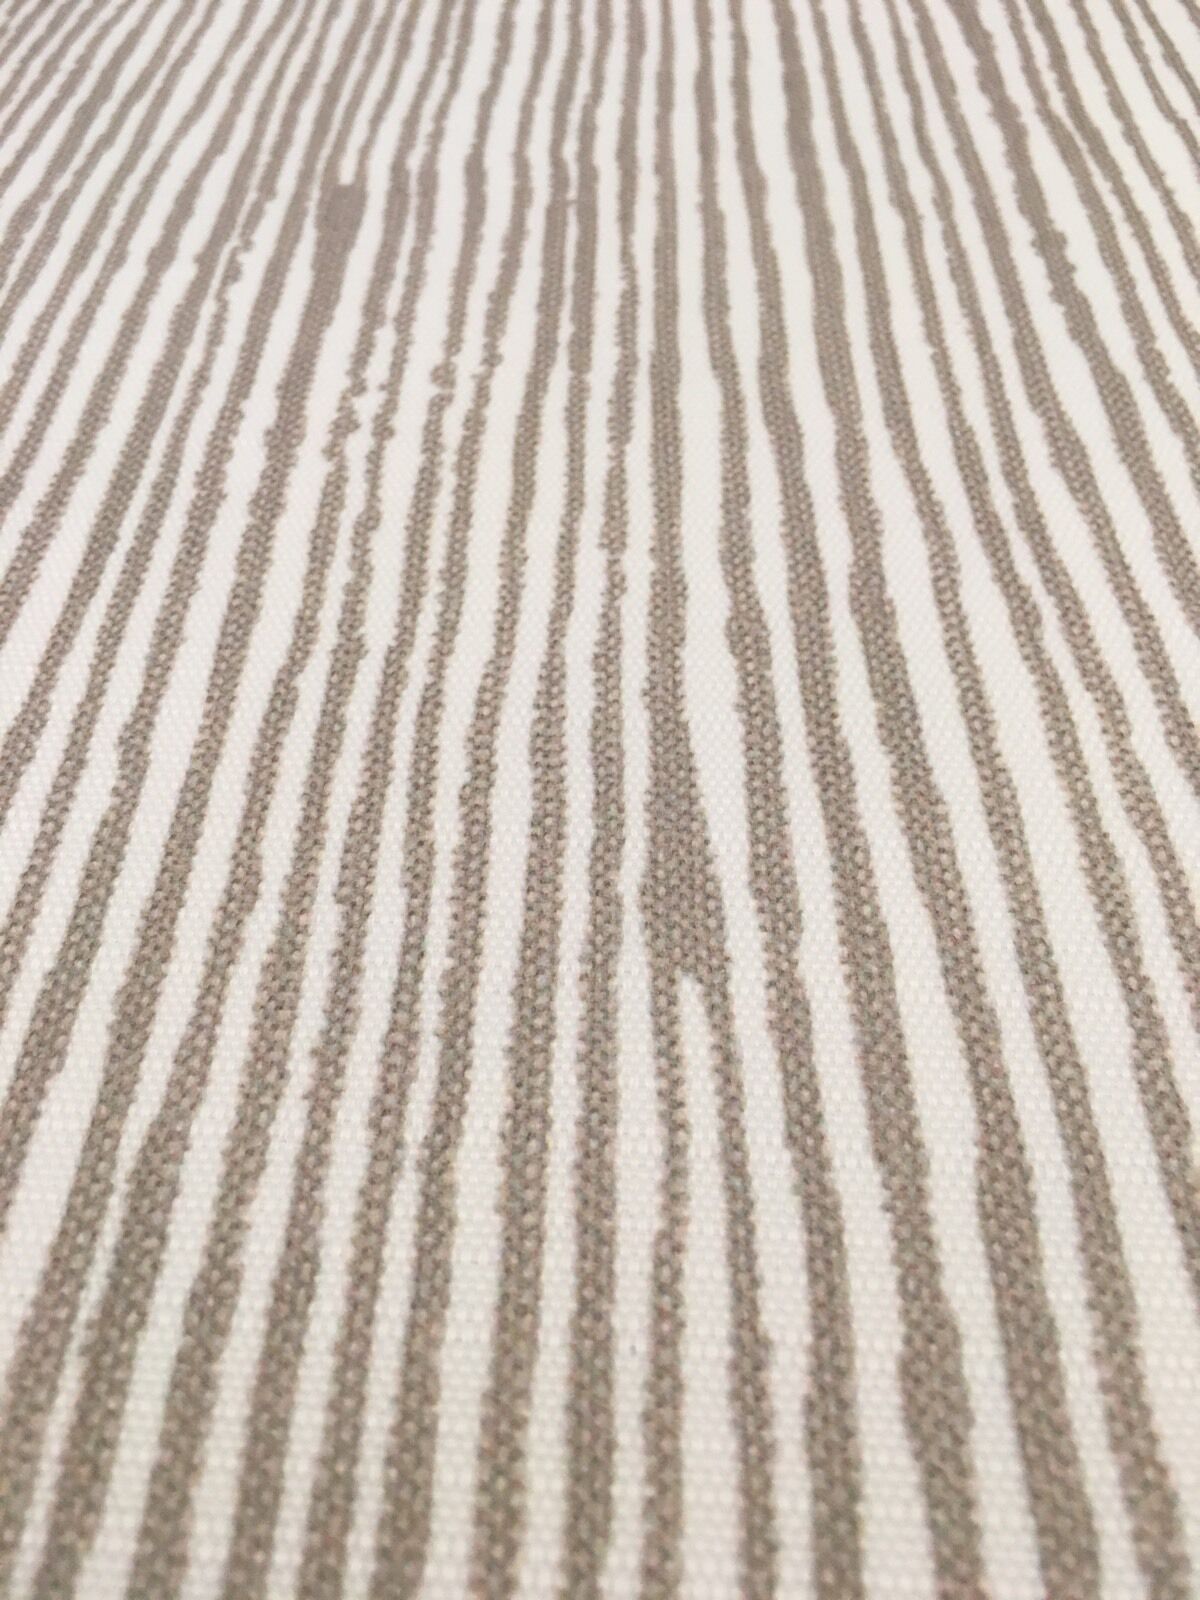 Groundworks OUTDOOR Lines Stripe Upholstery Fabric- Vertex / Linen  1.0 yd